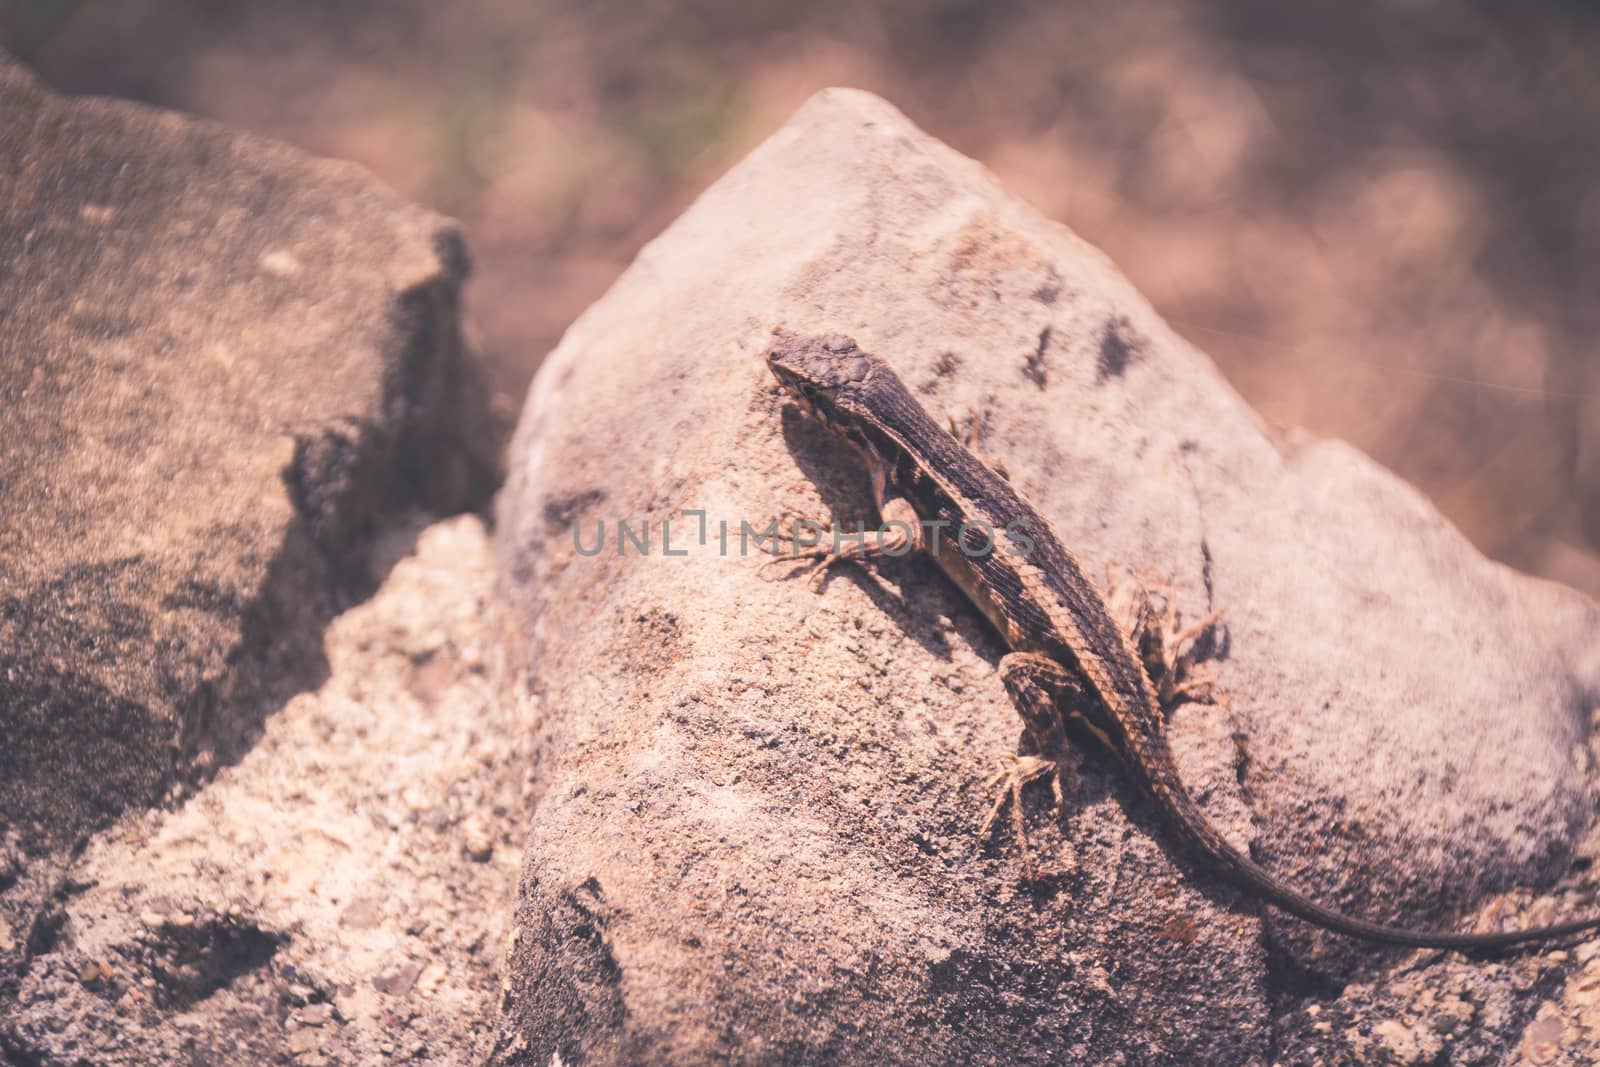 Photograph of a lizard on a rock outdoors